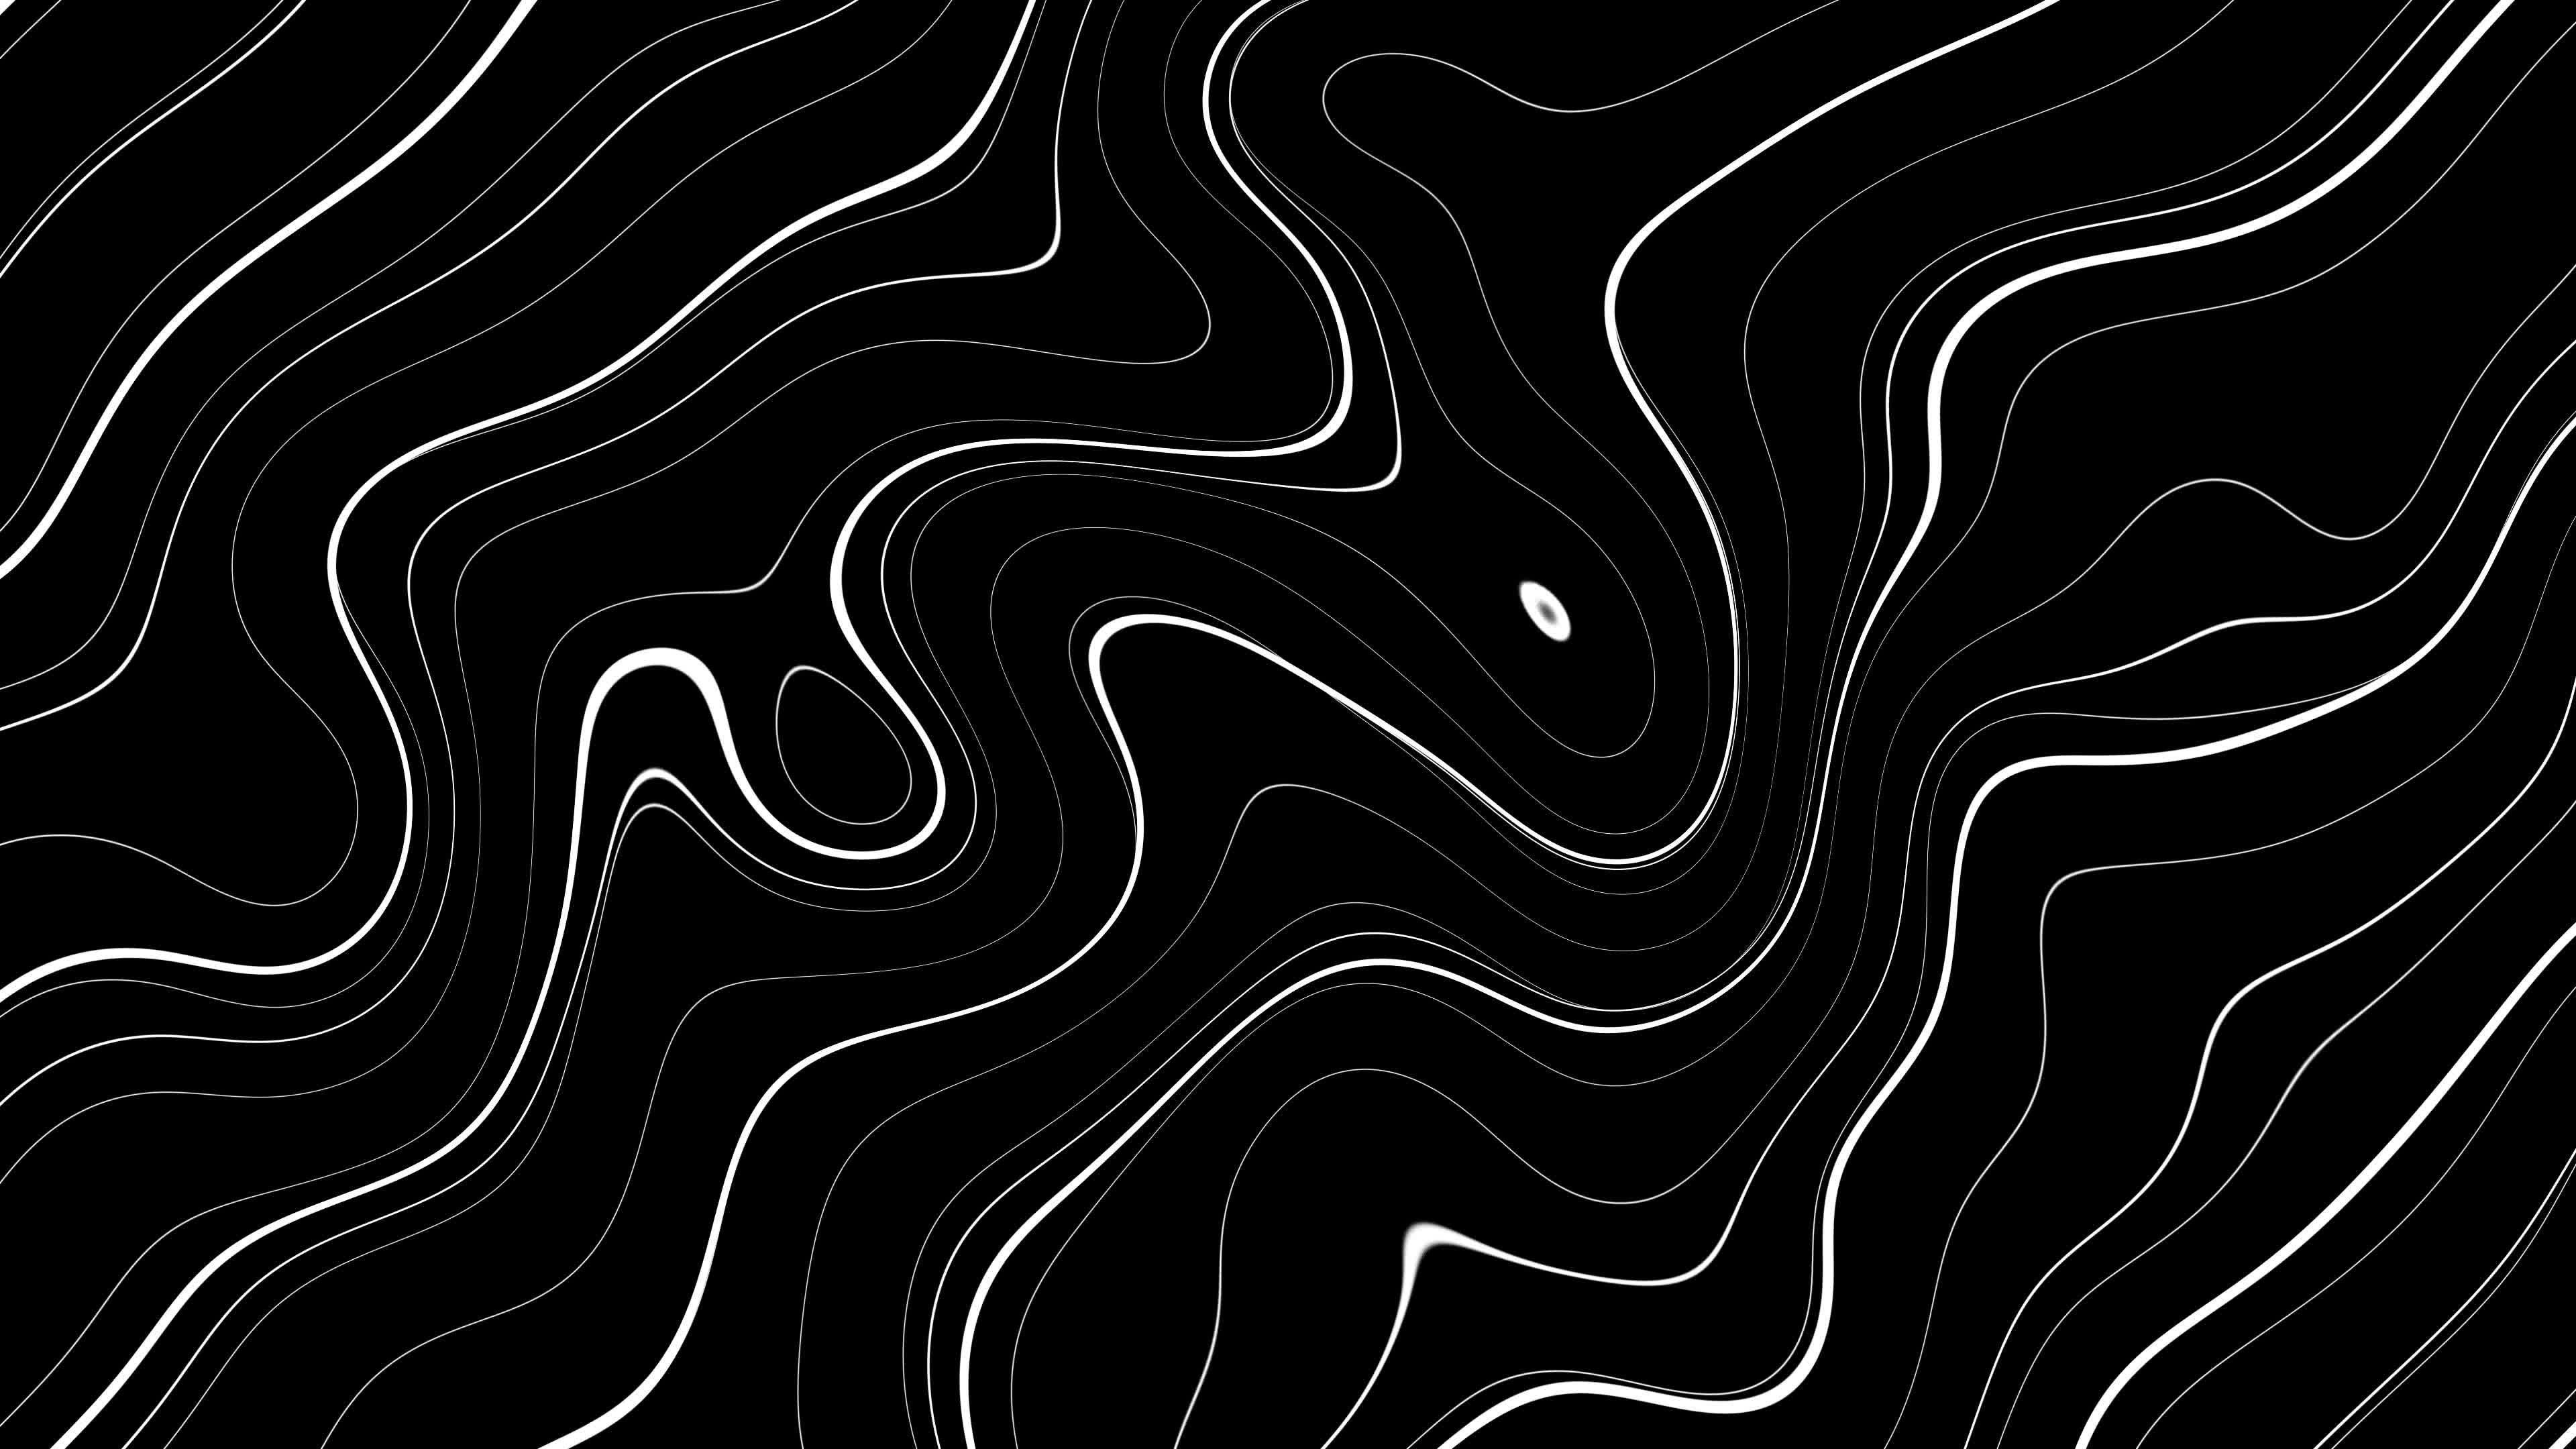 Sea Ocean BW Black White Water Waves Abstract Wallpaper Stock Image   Image of pattern lake 121492387